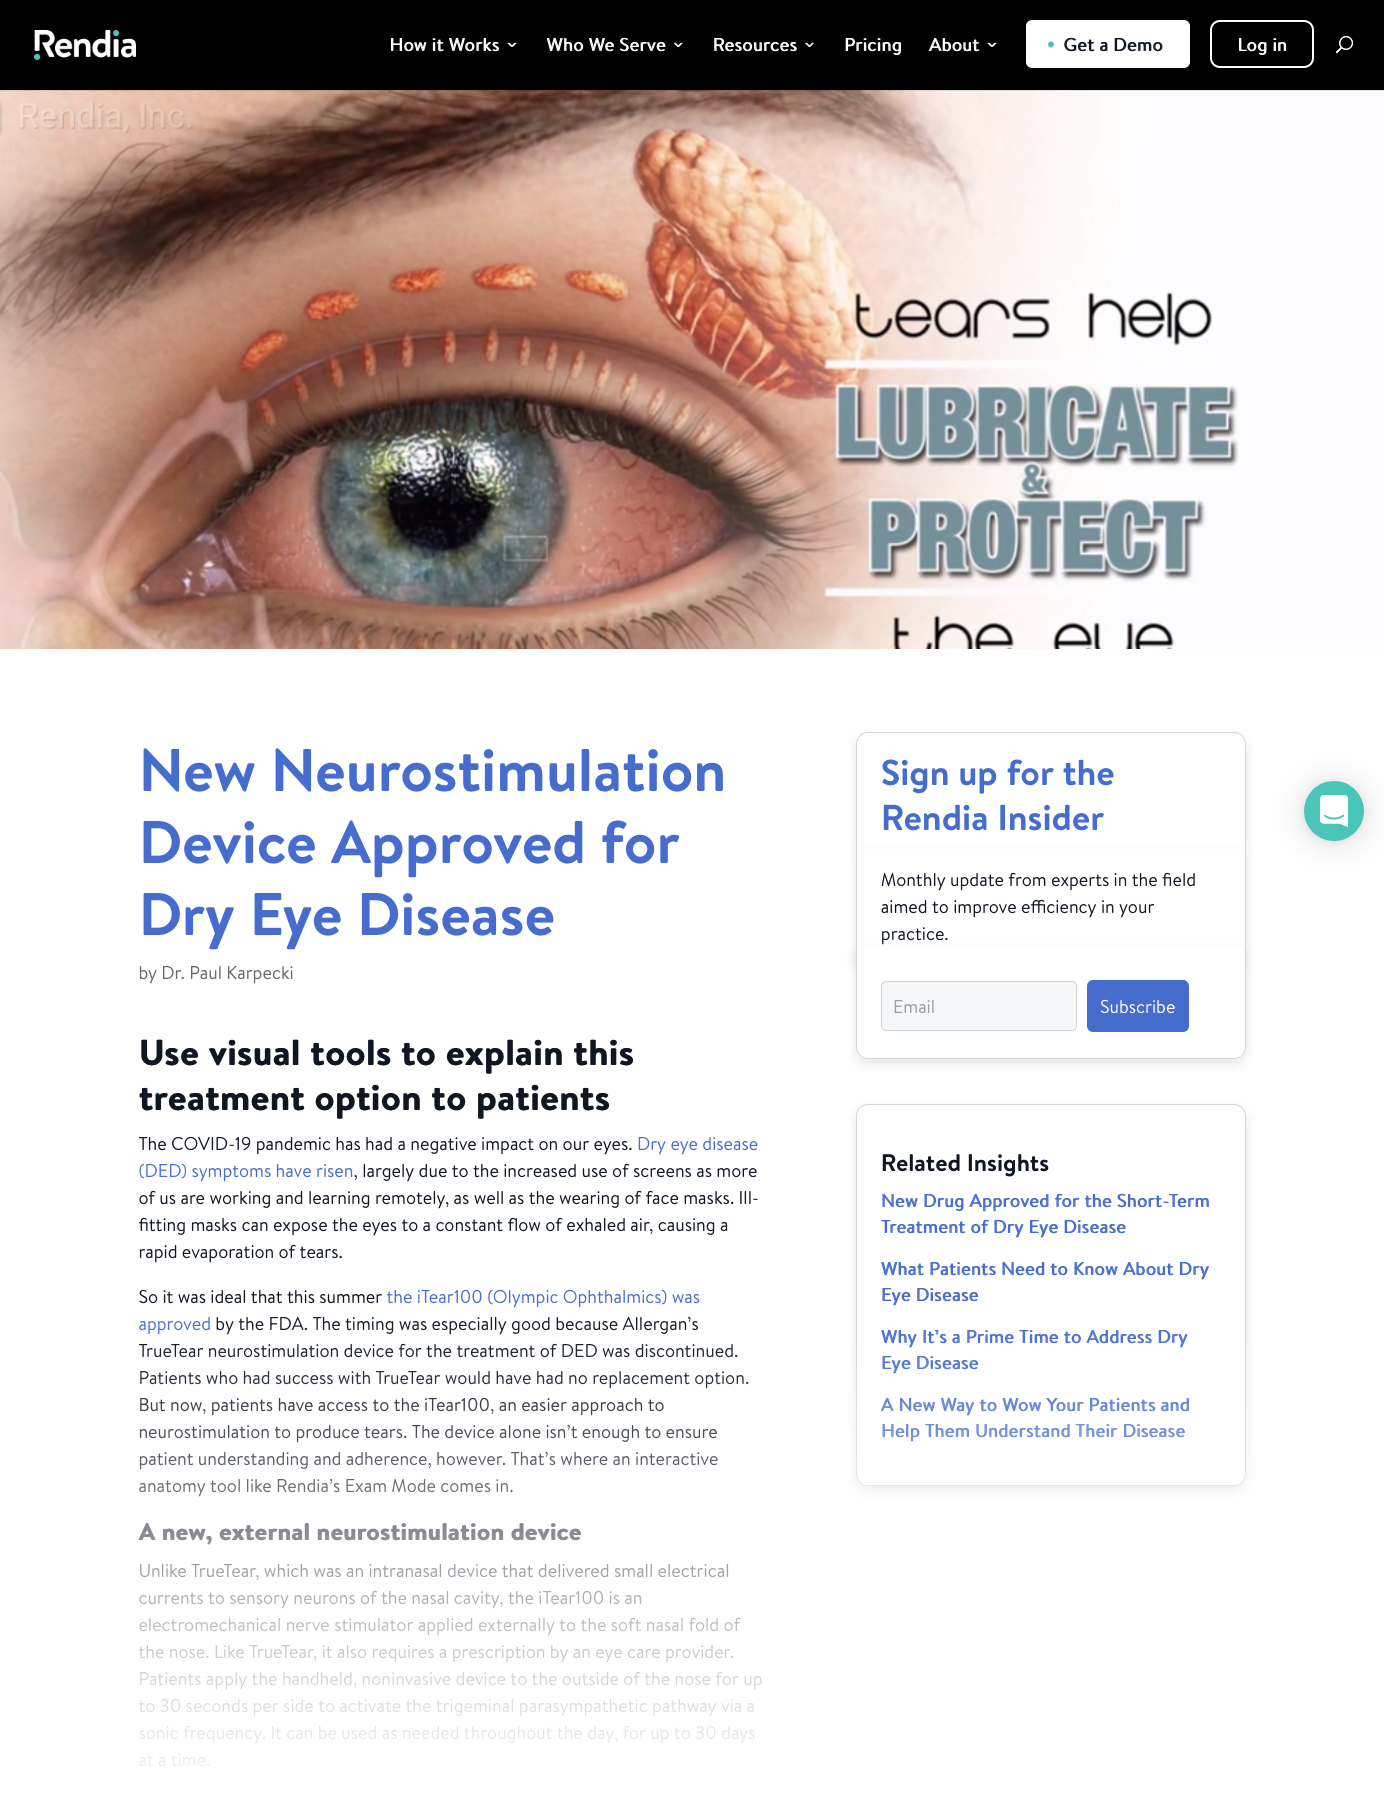 5-Rendia-resources-insights-new-neurostimulation-device-june3-2020